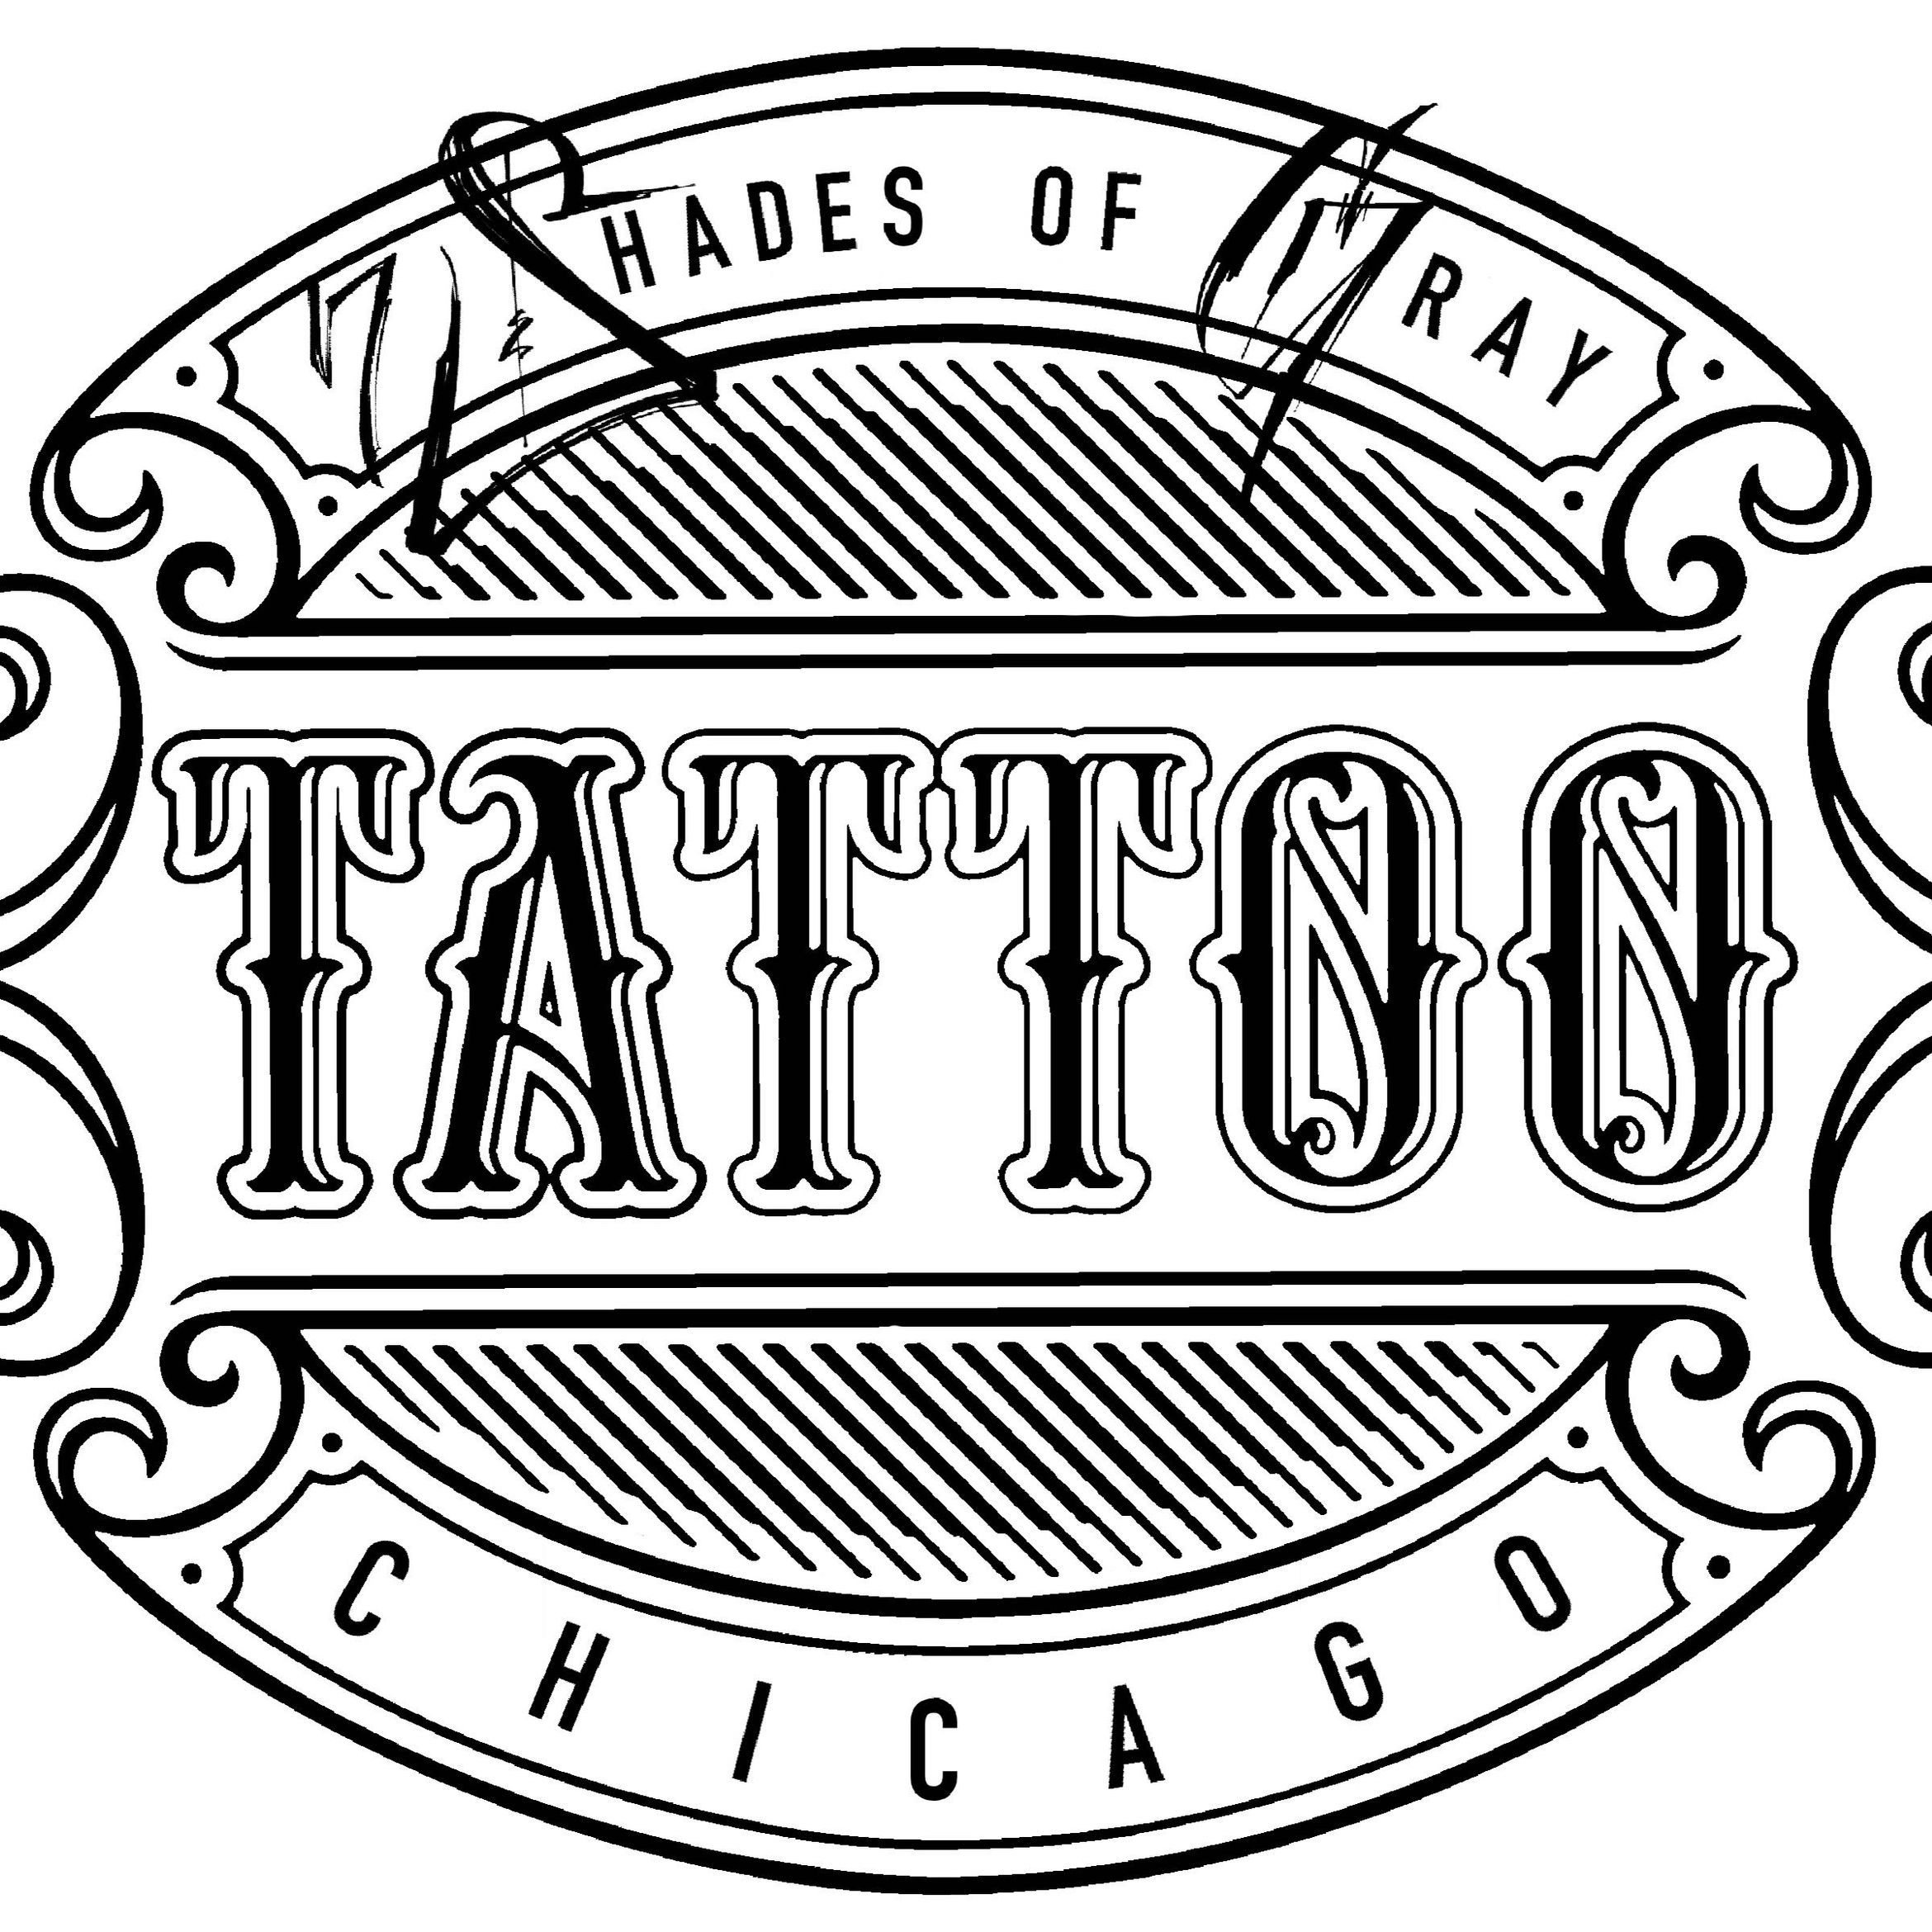 7 Shades of Gray Tattoos, 1550 N Mason Ave, Chicago, 60651